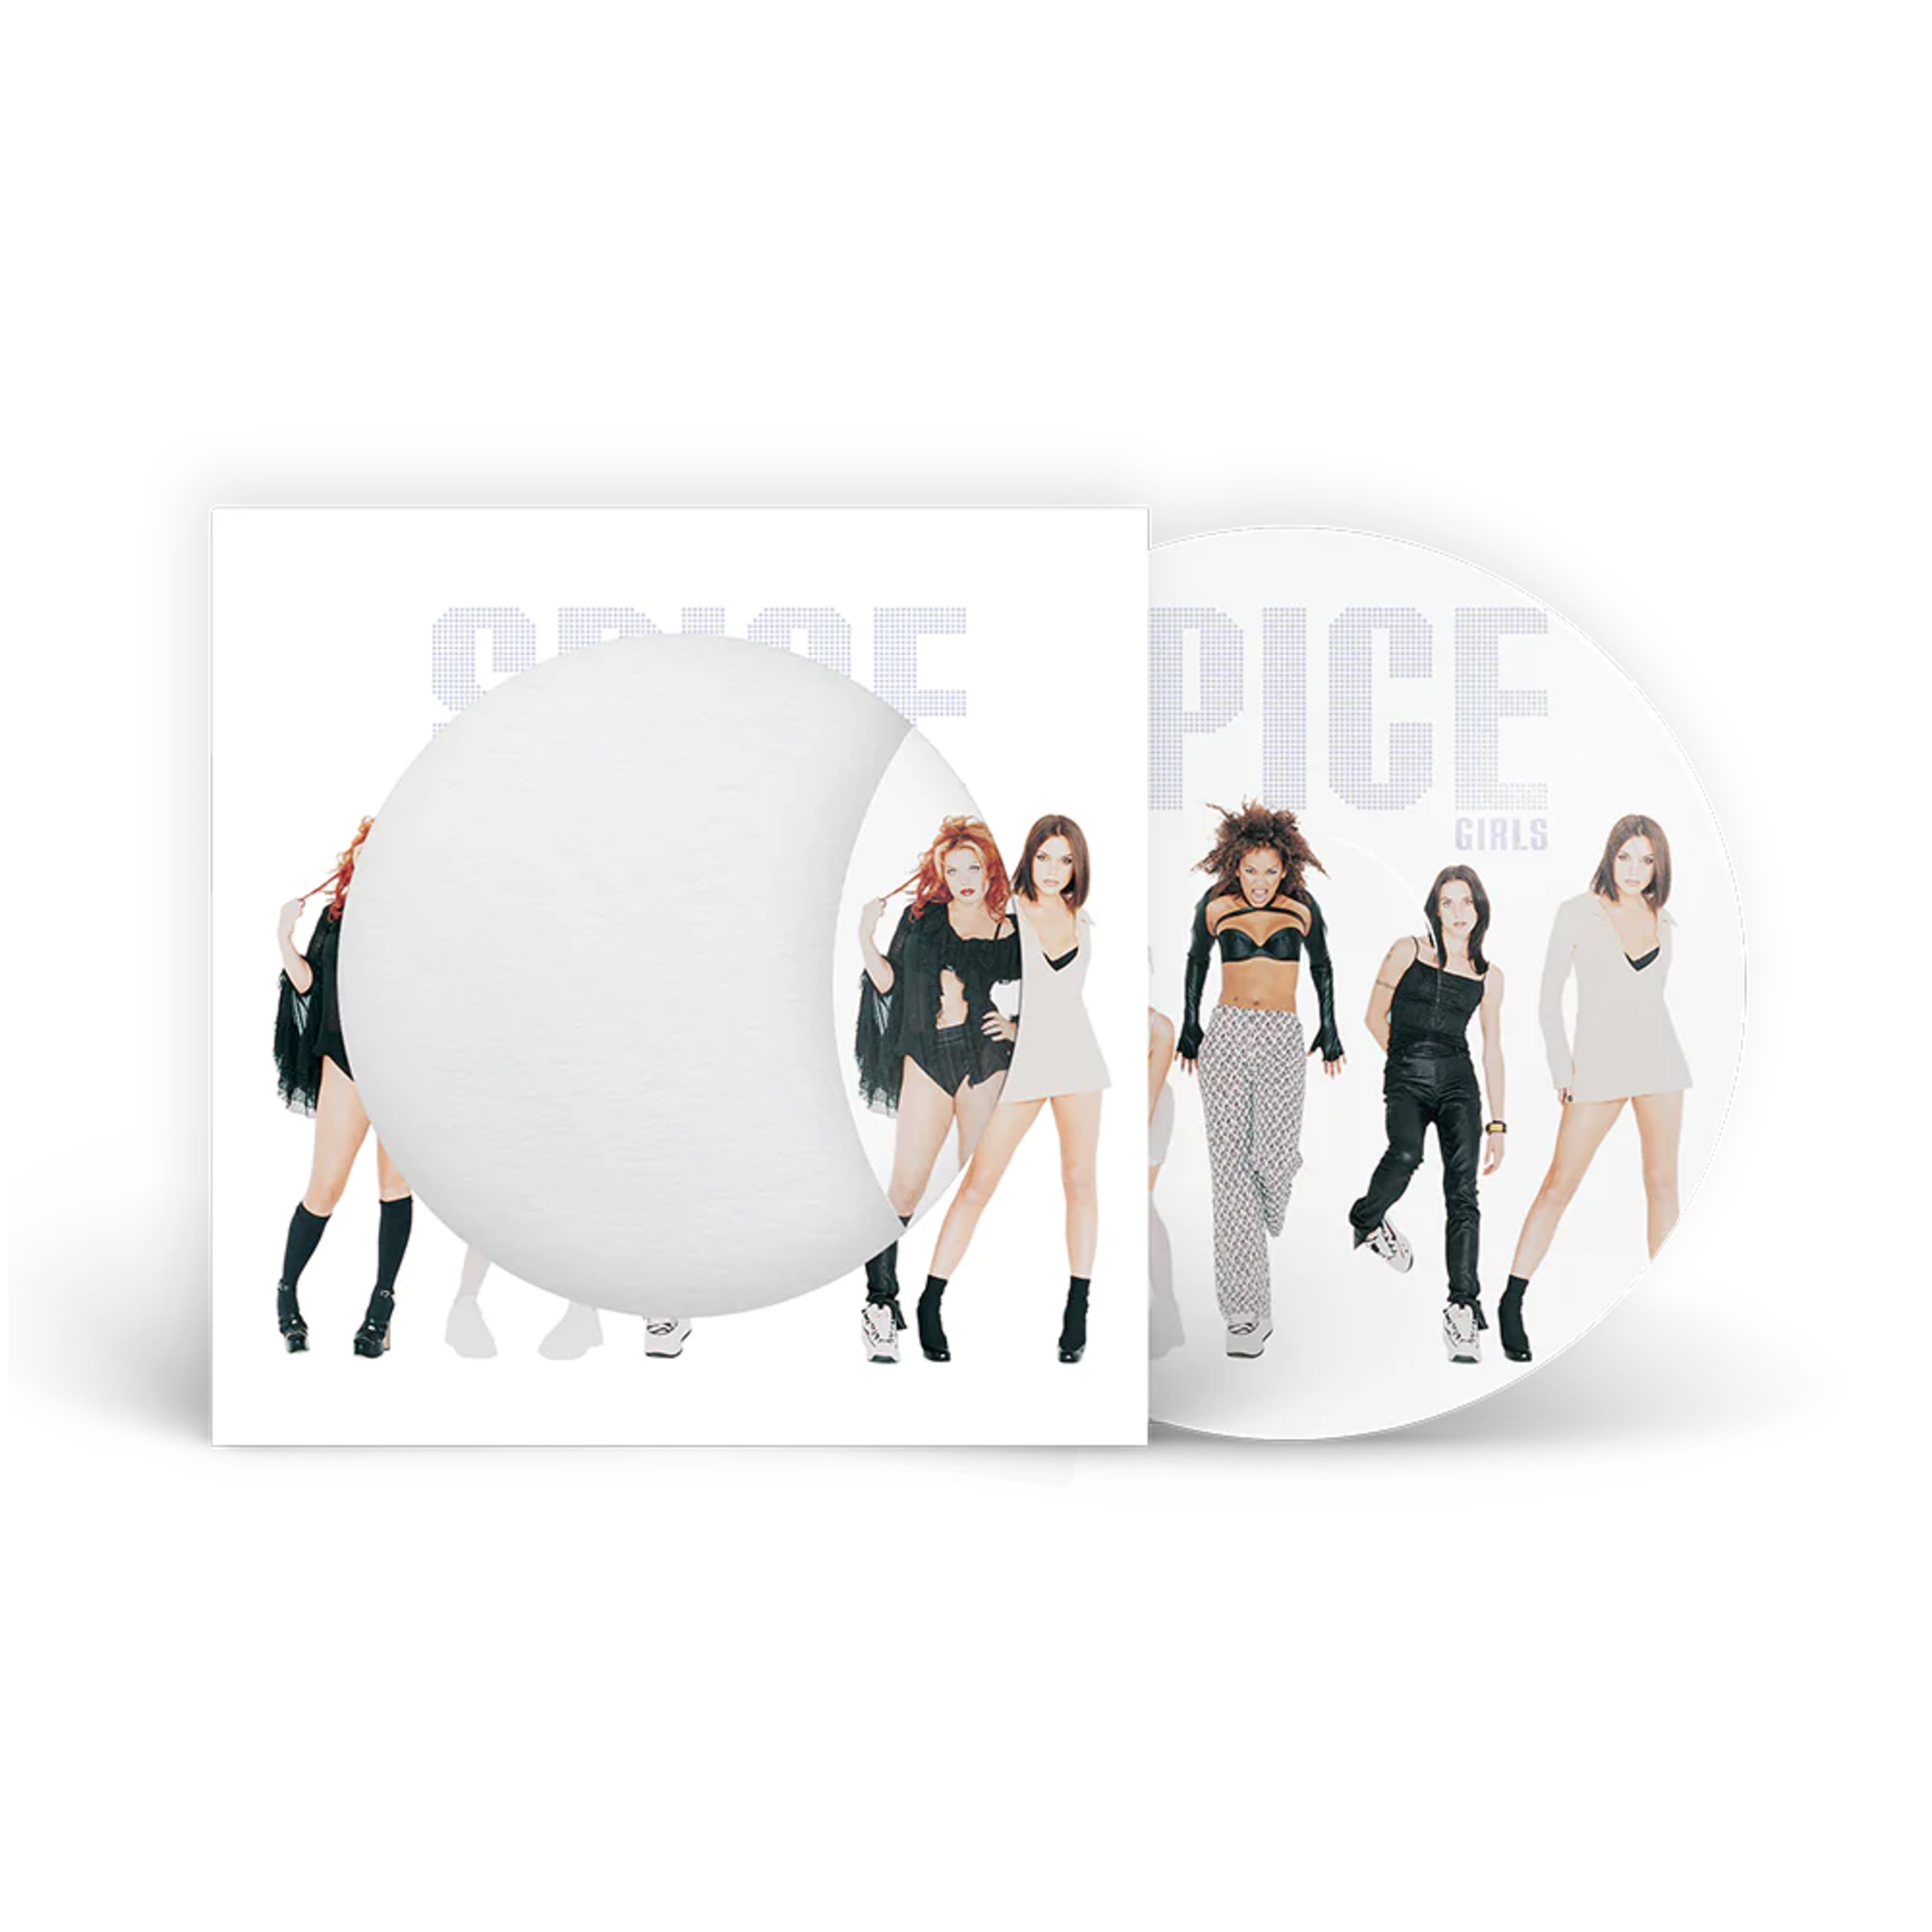 Bravado Spiceworld 25 Spice Girls Ltd Picture Disc Lp